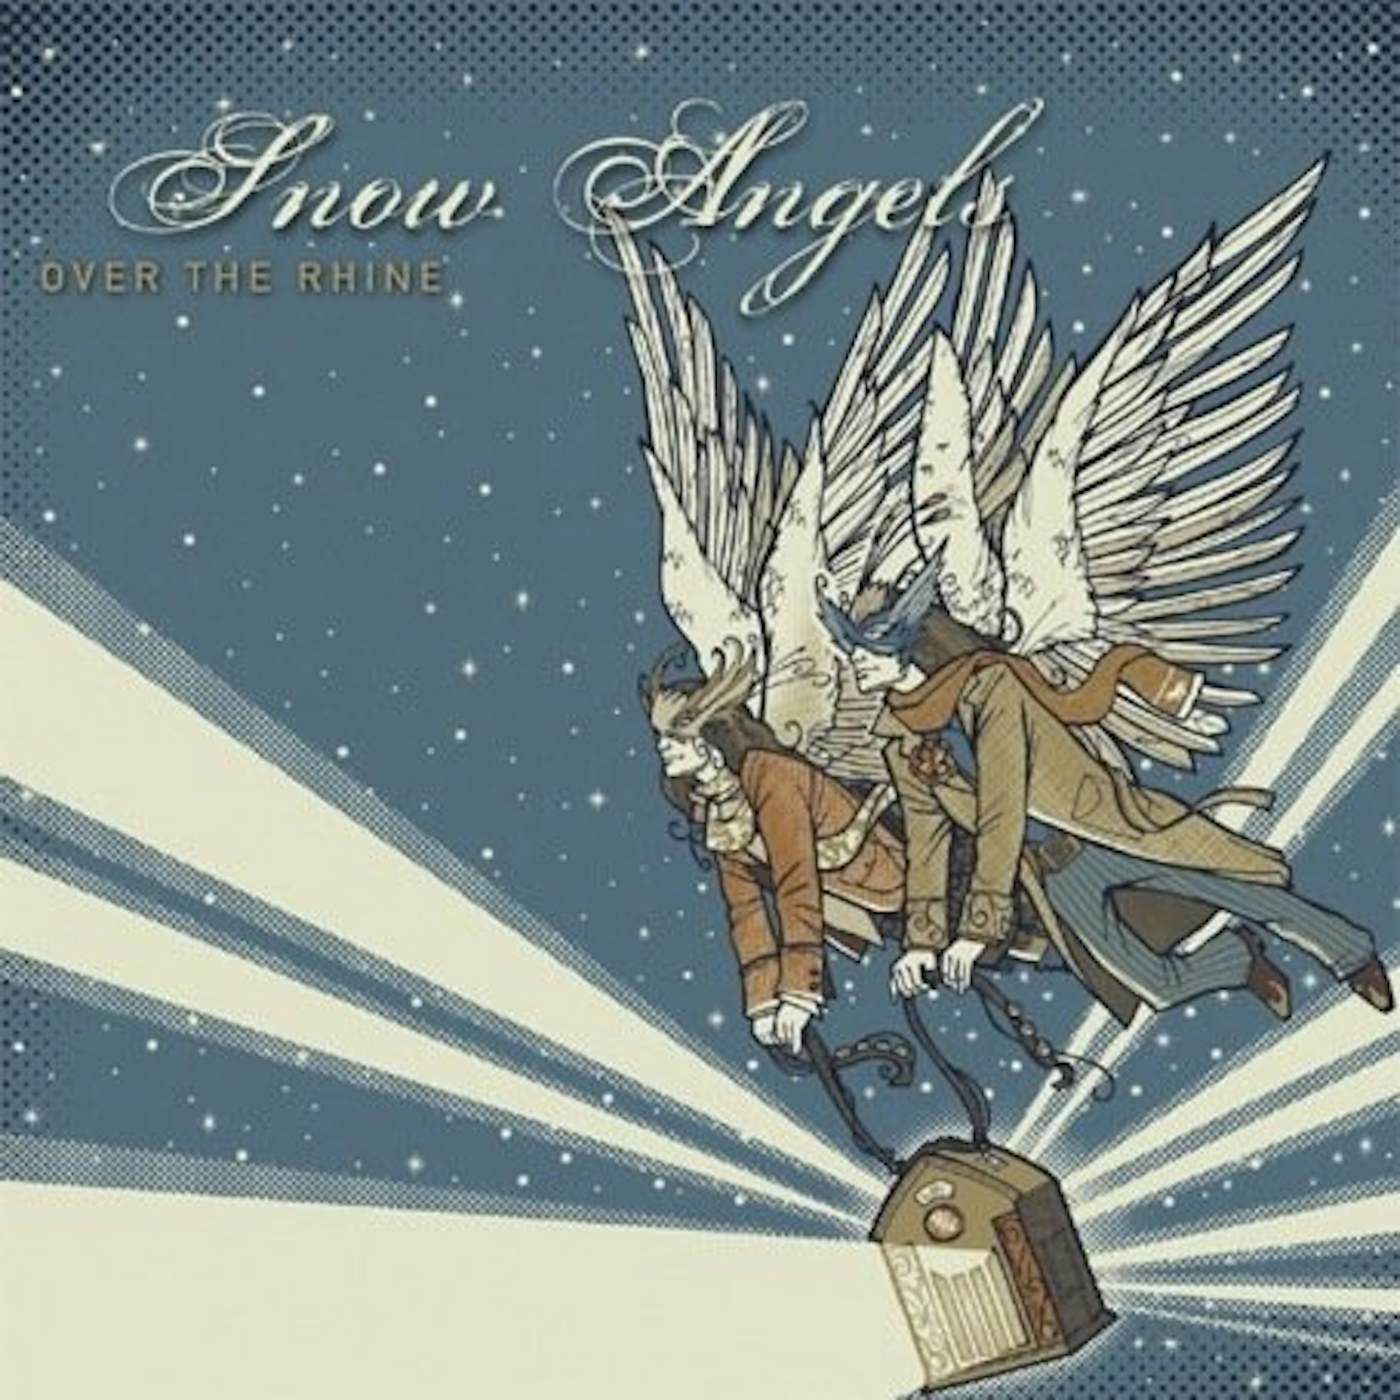 Over the Rhine Snow Angels Vinyl Record